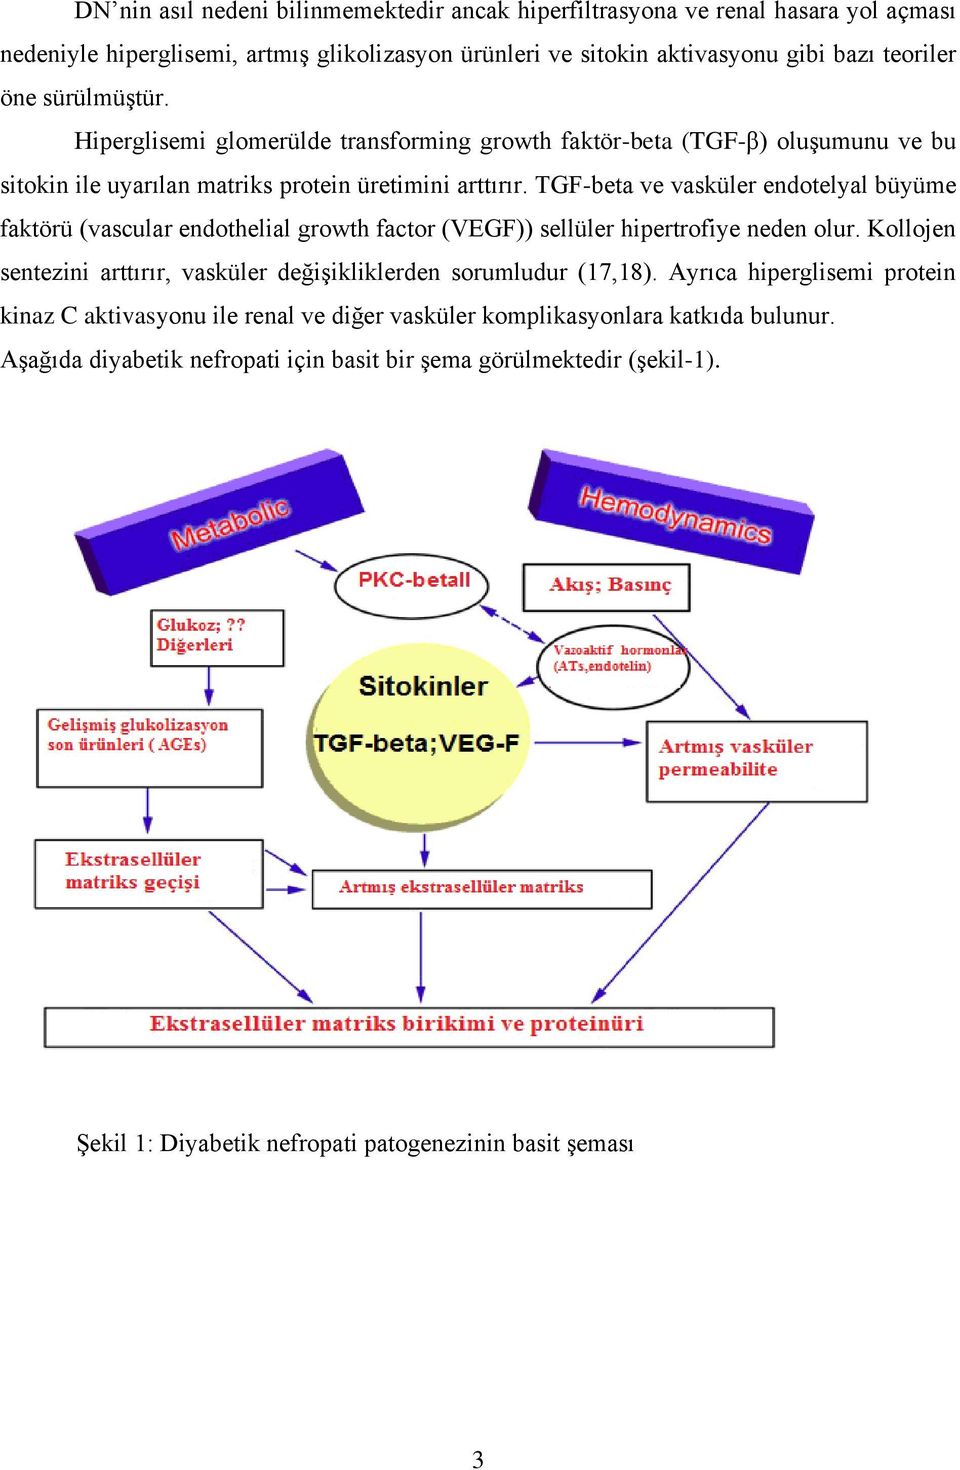 TGF-beta ve vasküler endotelyal büyüme faktörü (vascular endothelial growth factor (VEGF)) sellüler hipertrofiye neden olur.